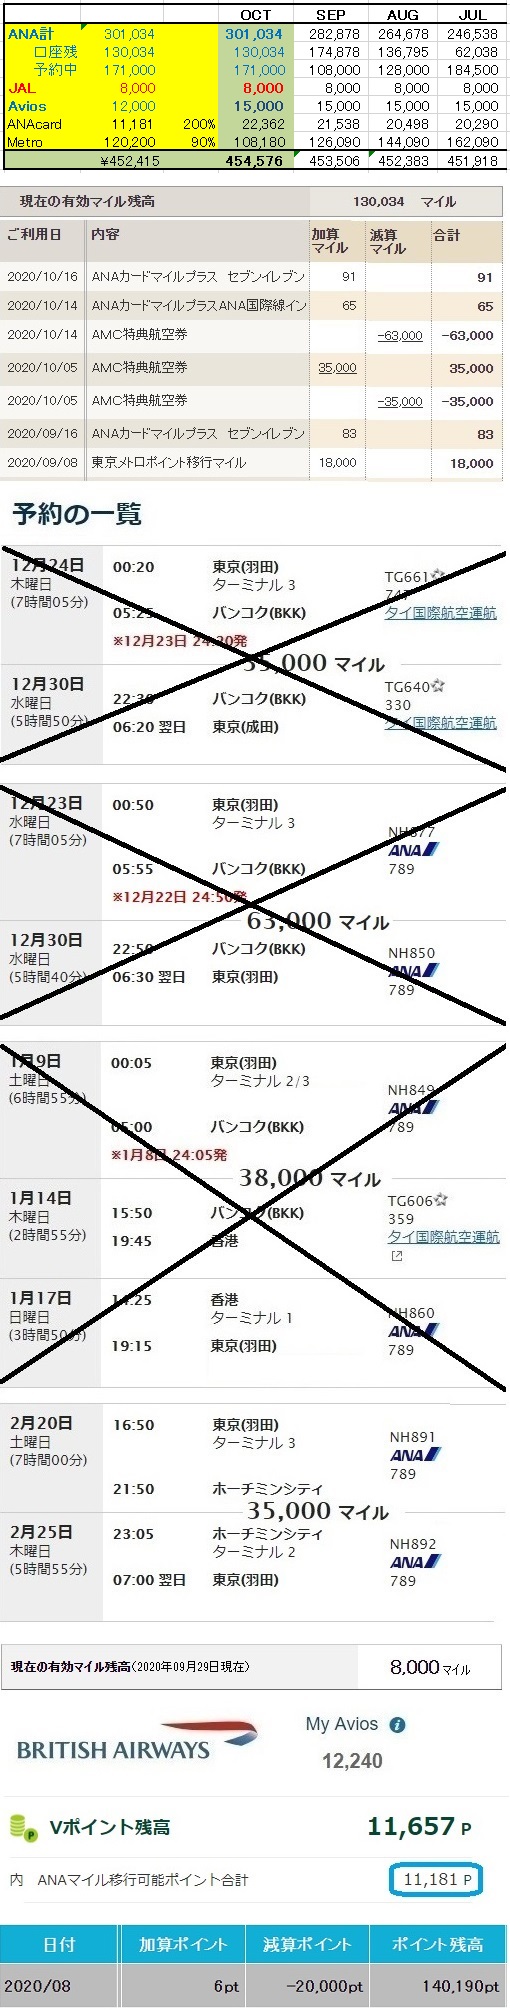 【ANAマイル】 累計獲得888,534M→587,500M搭乗